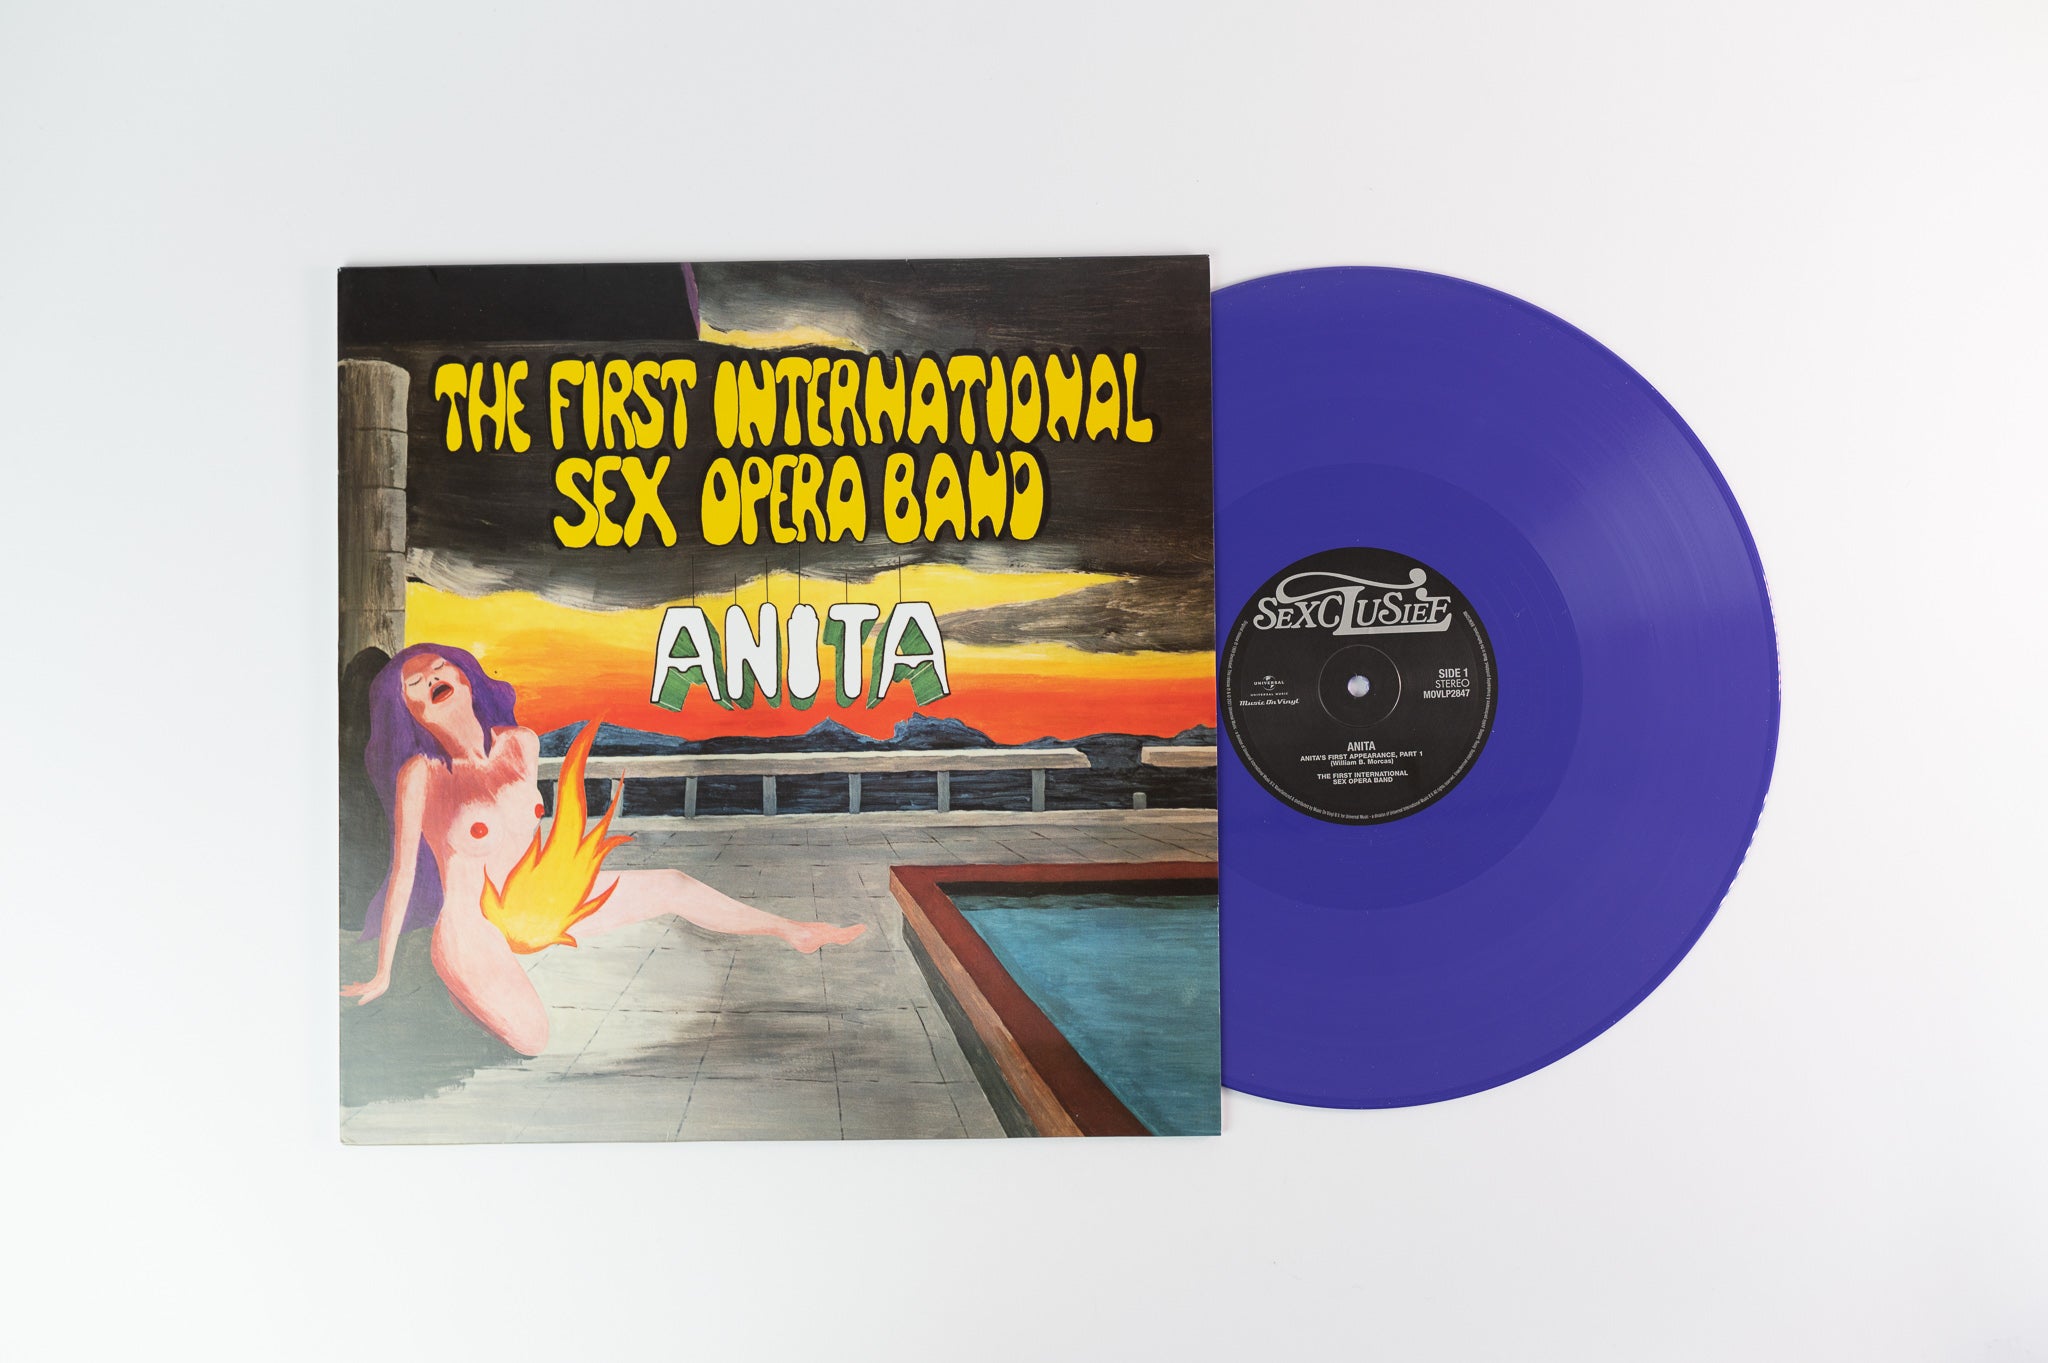 The First International Sex Opera Band - Anita on Music on Viny Sexclusief Limited Purple Vinyl